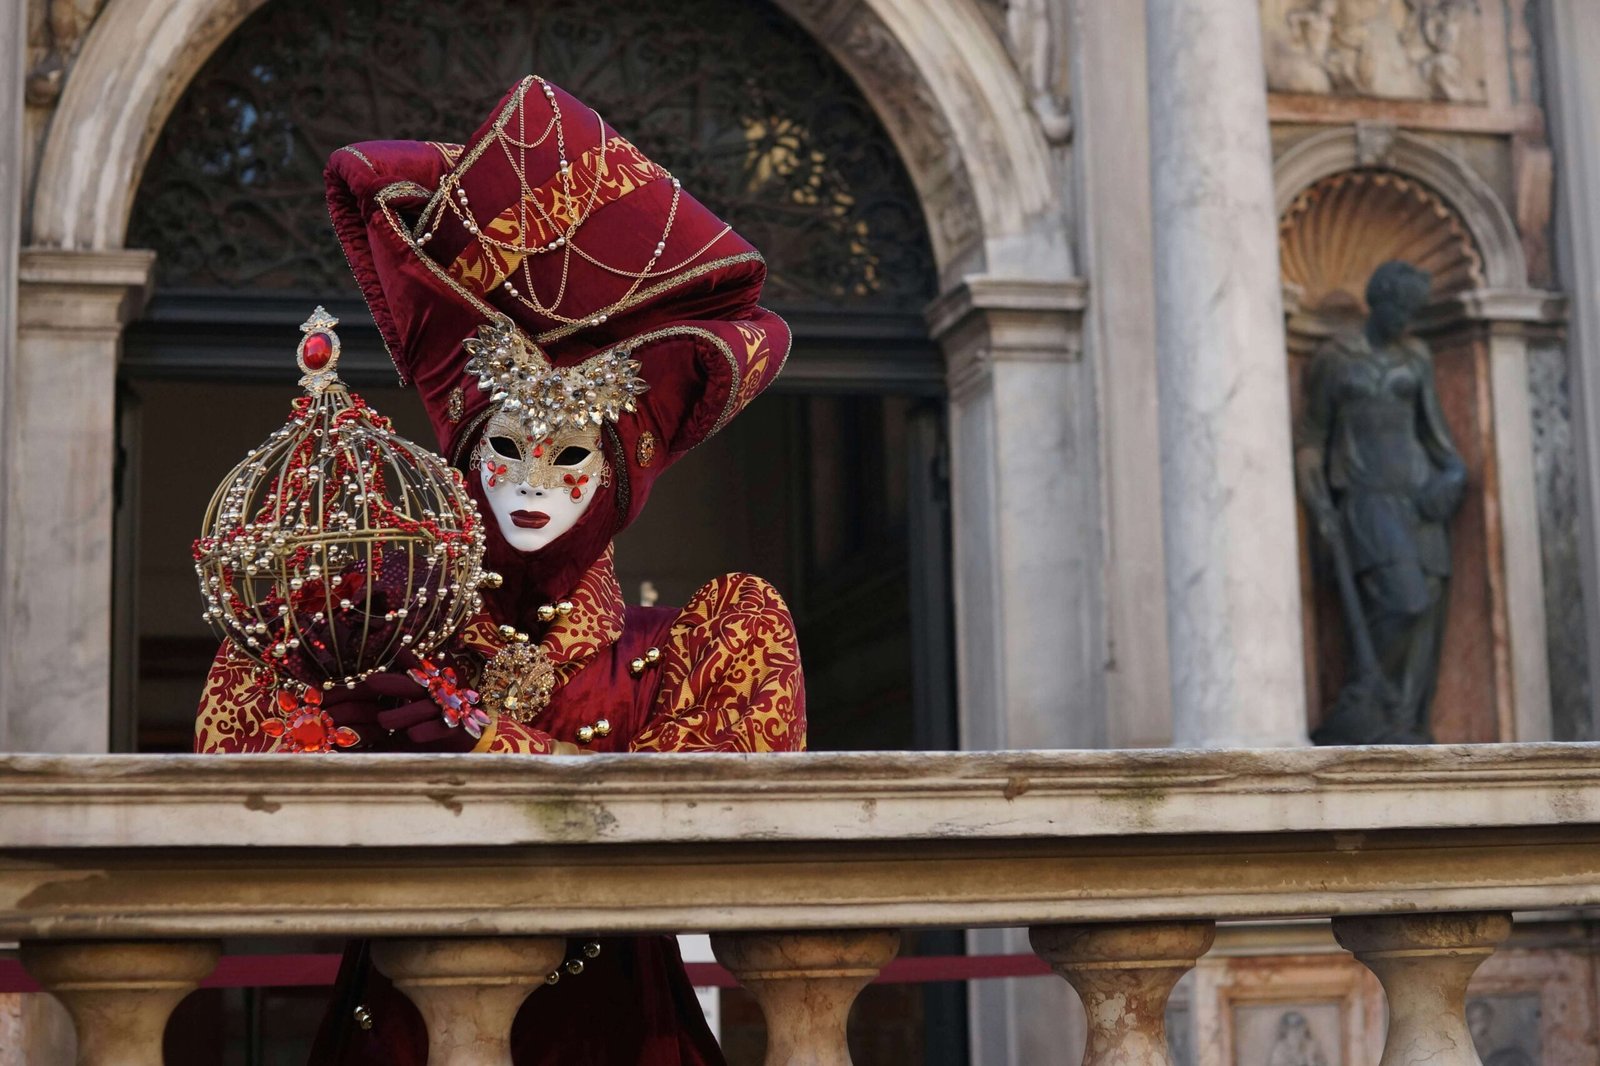 Venice carnival, best festivals around the world